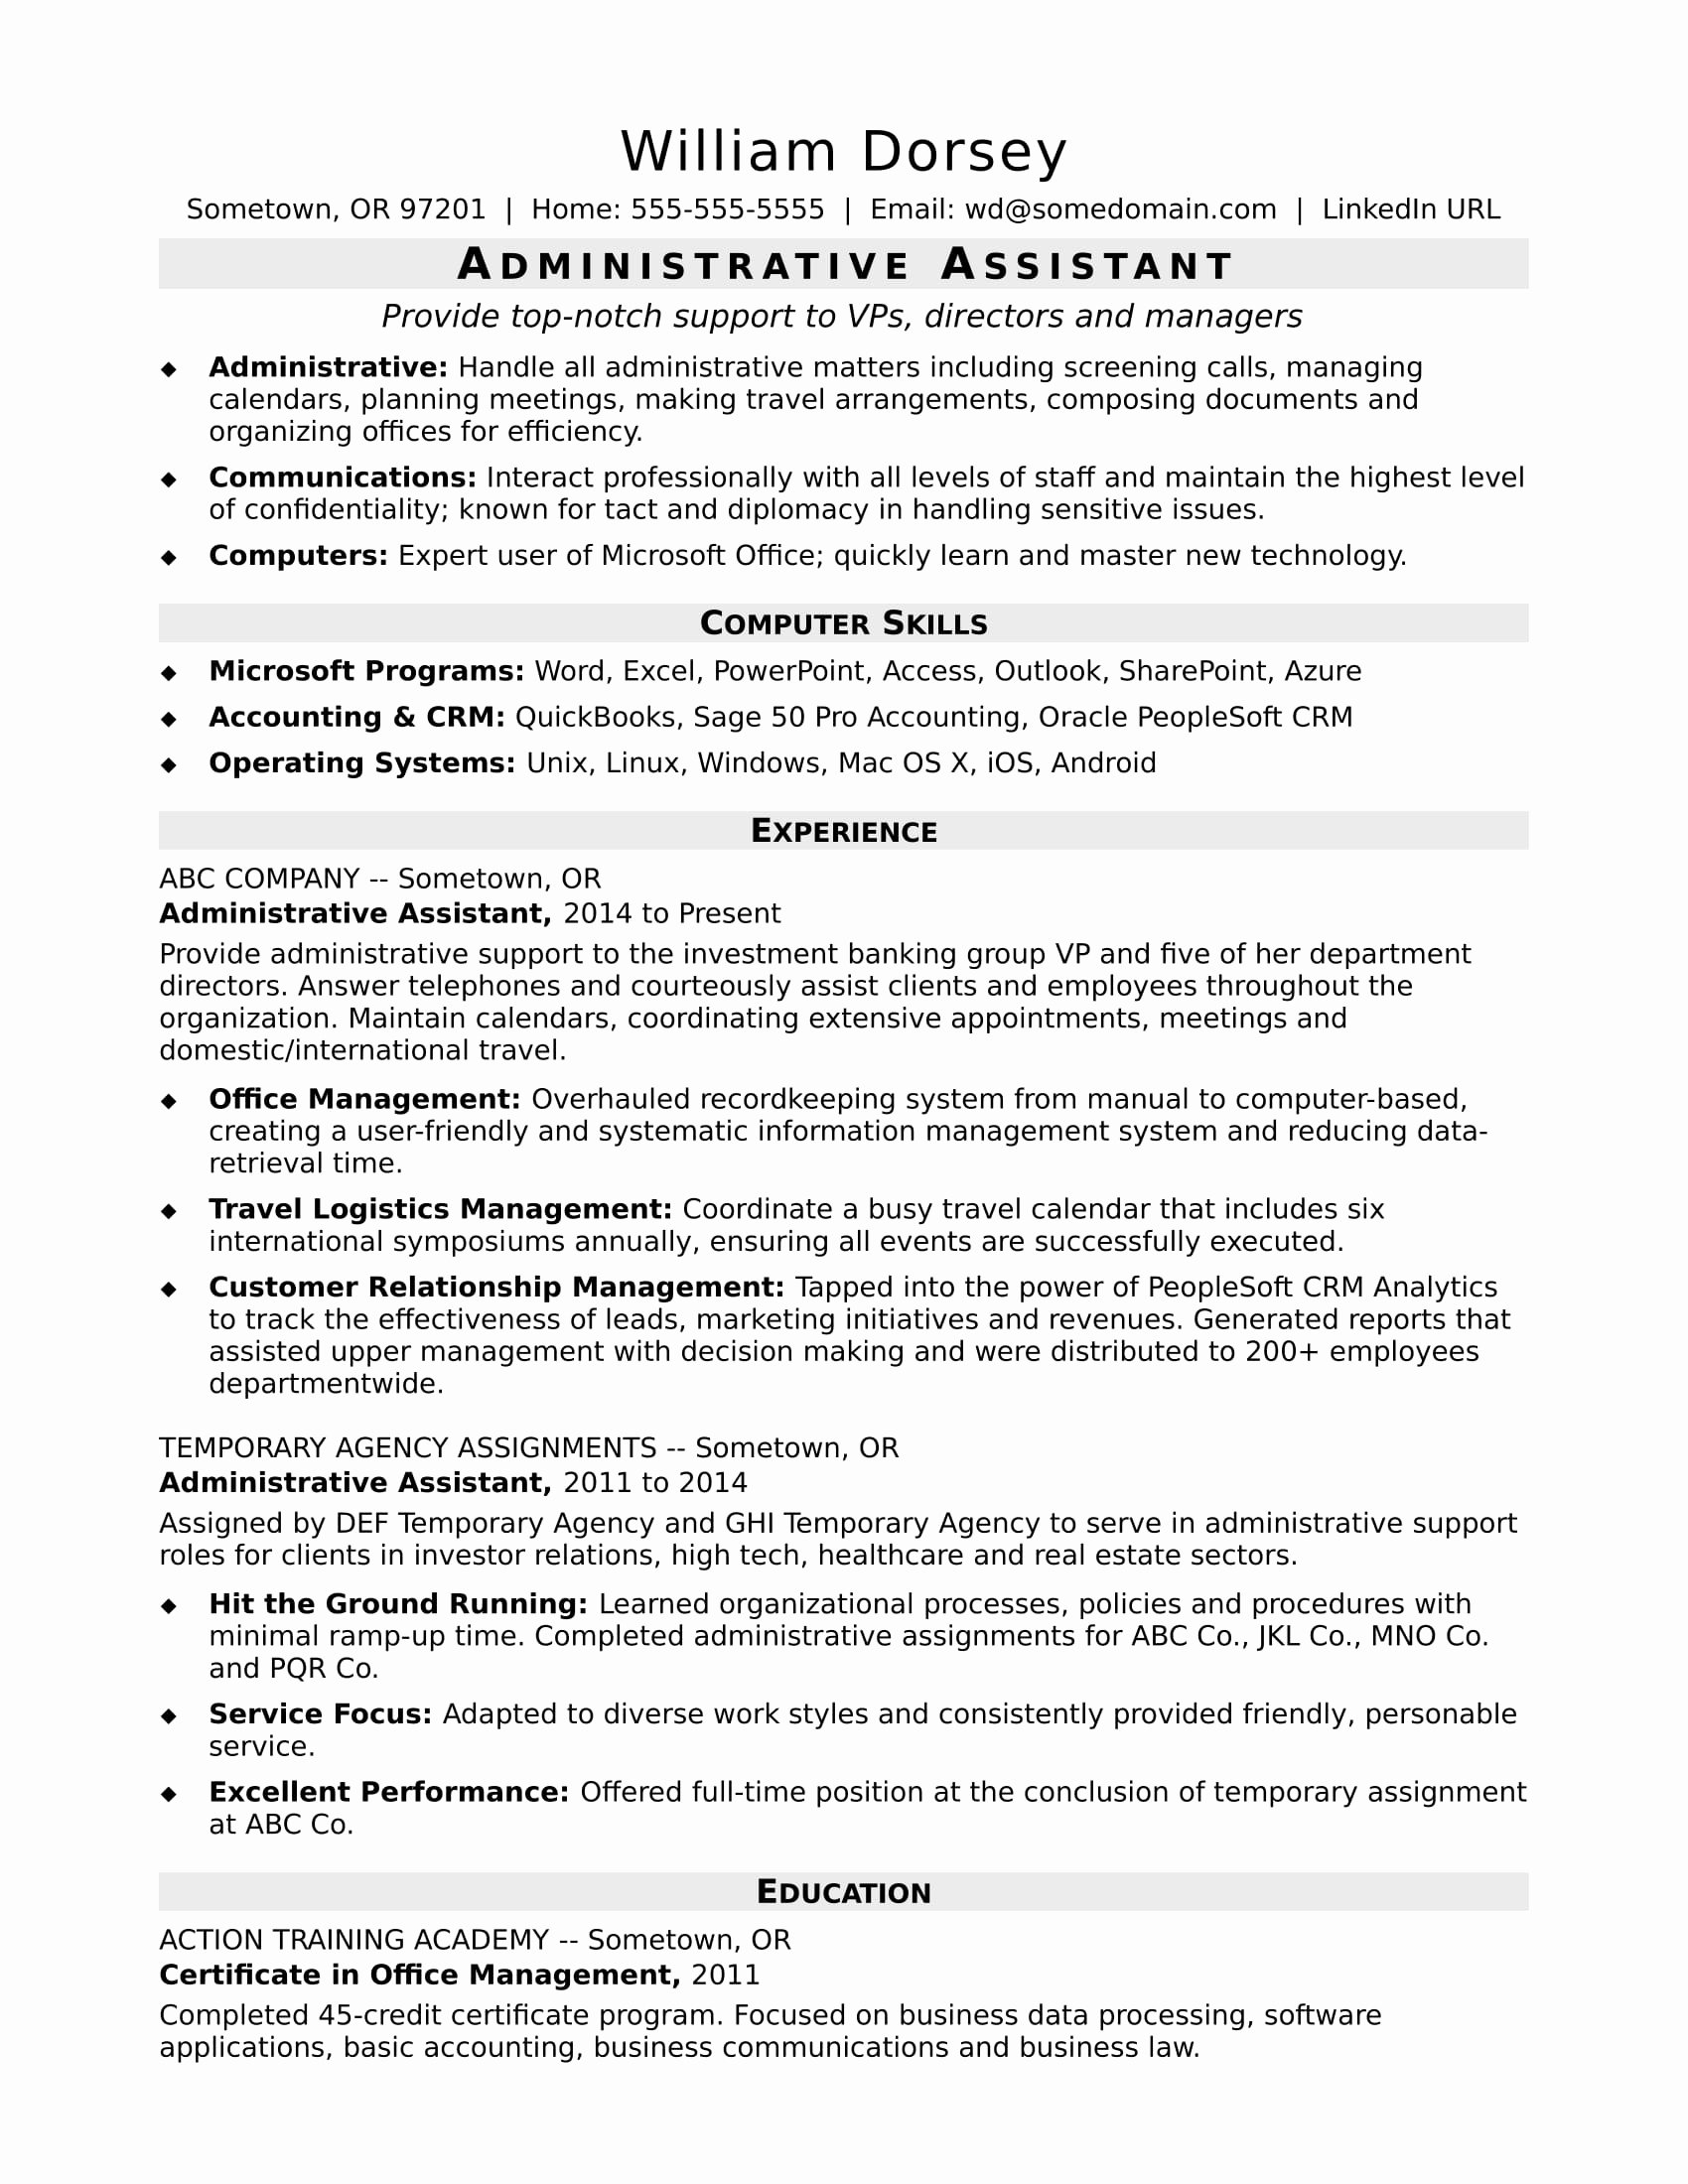 Midlevel Administrative assistant Resume Sample